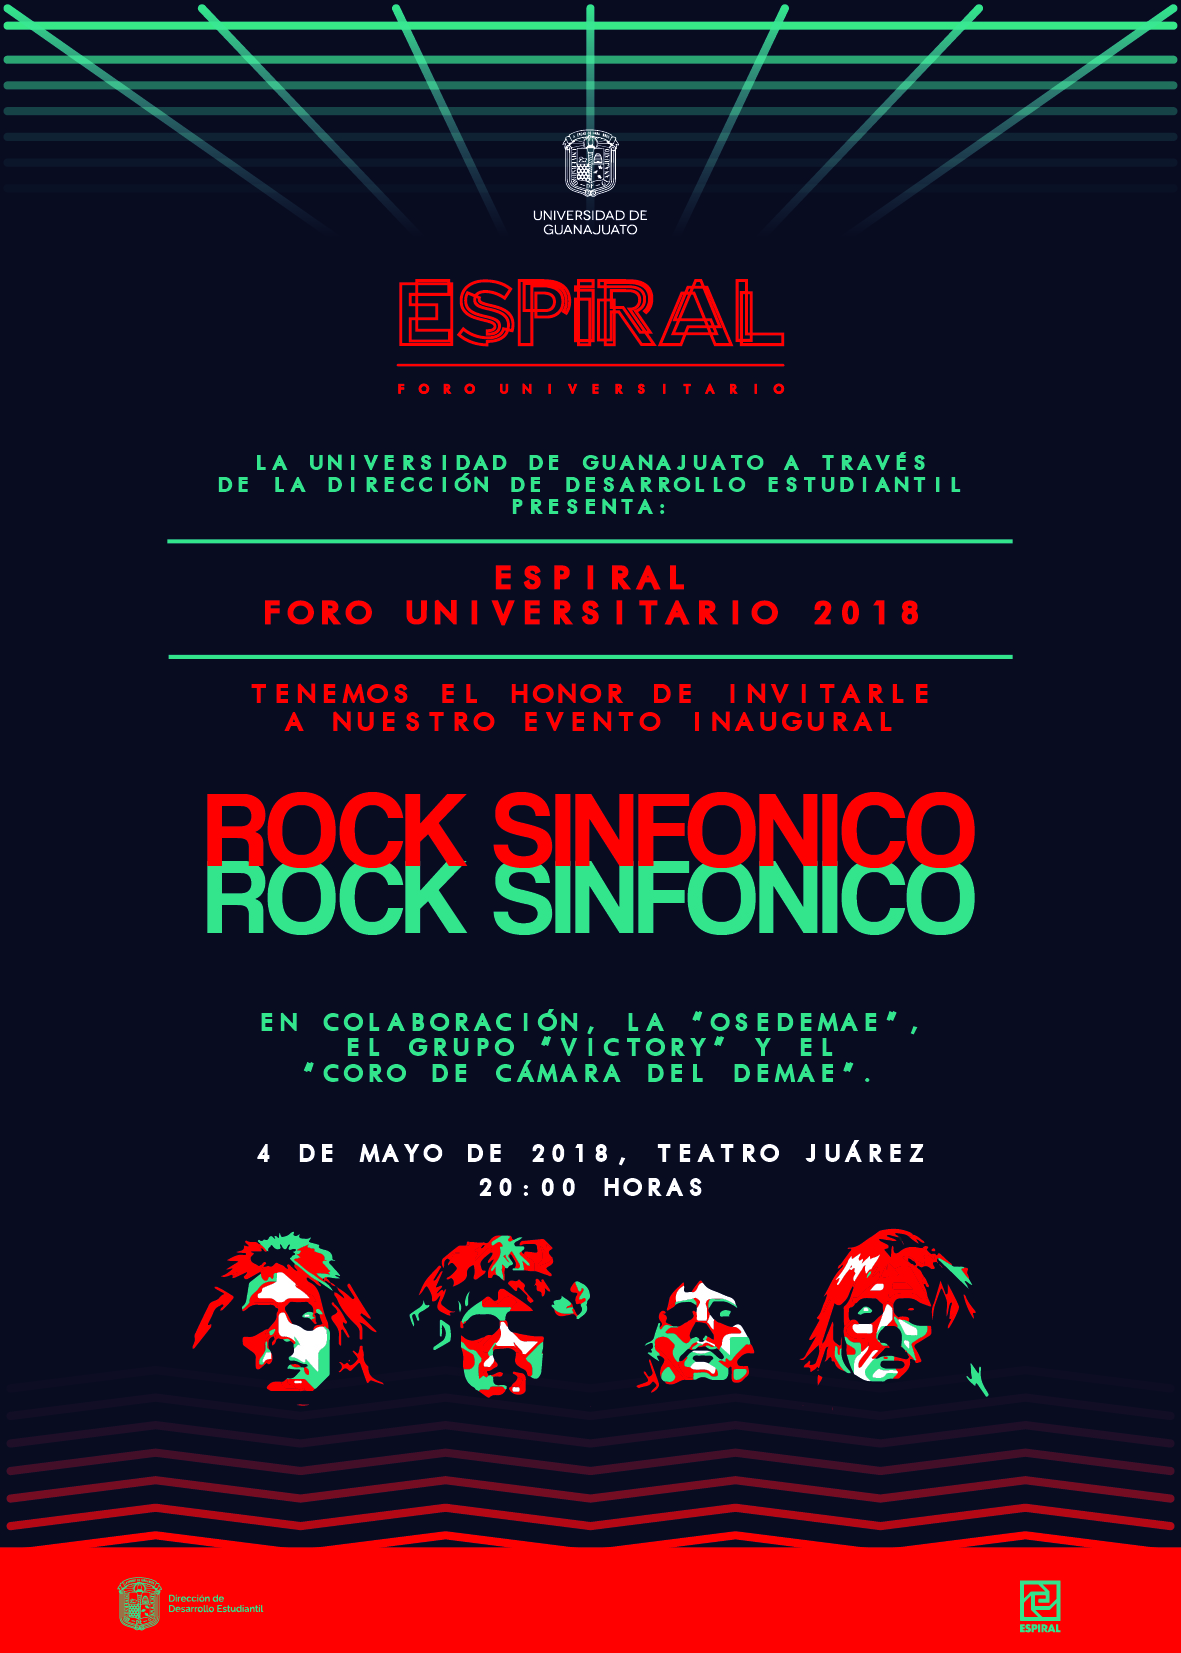 Invitacion Rock sinfonico 10 x 14